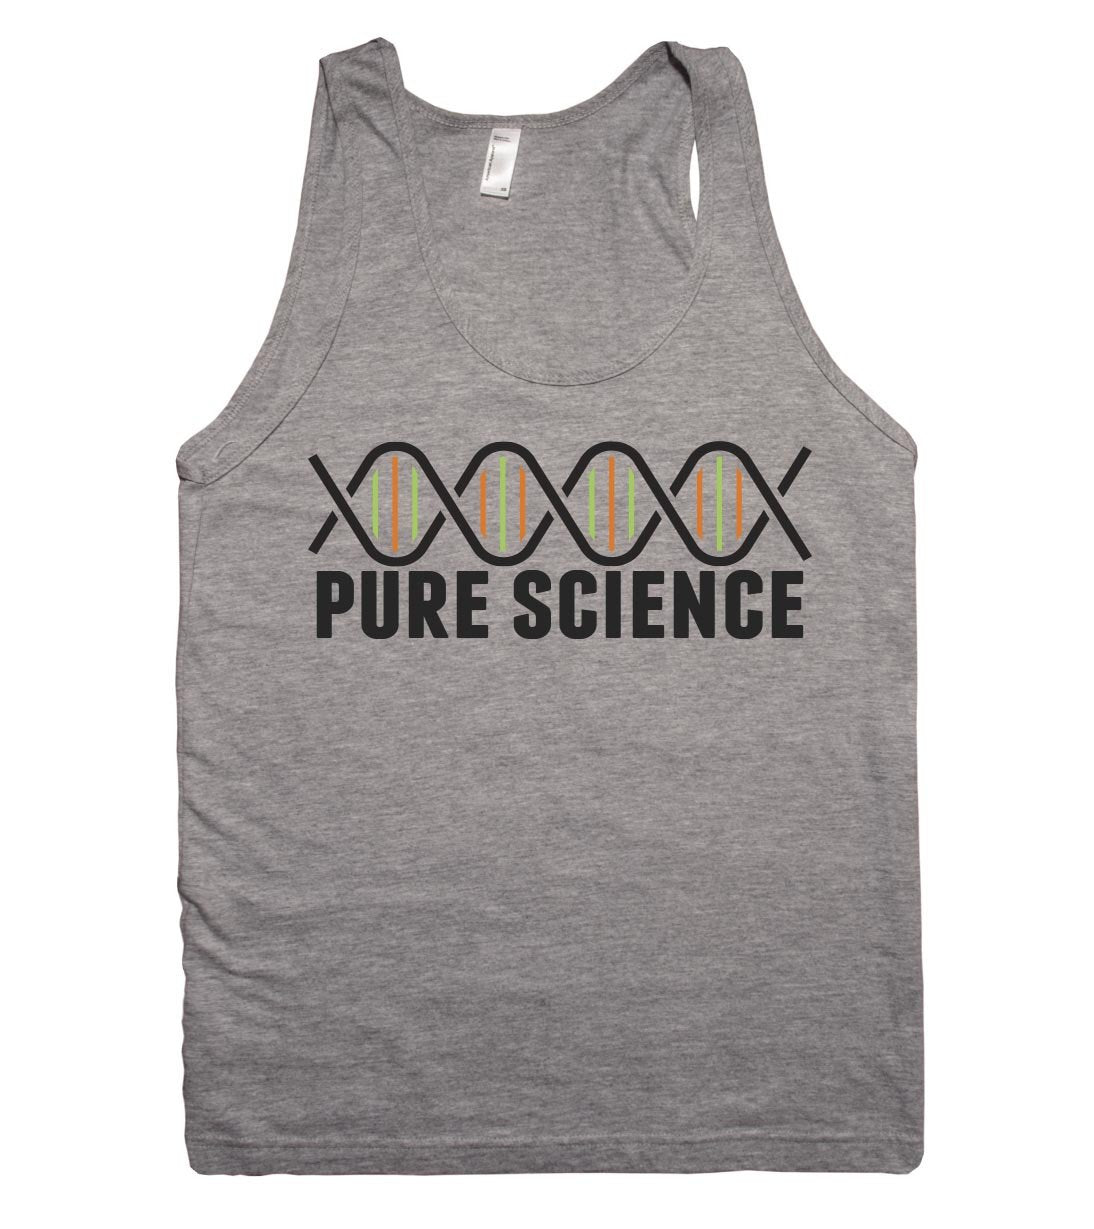 pure science tank top shirt - Shirtoopia